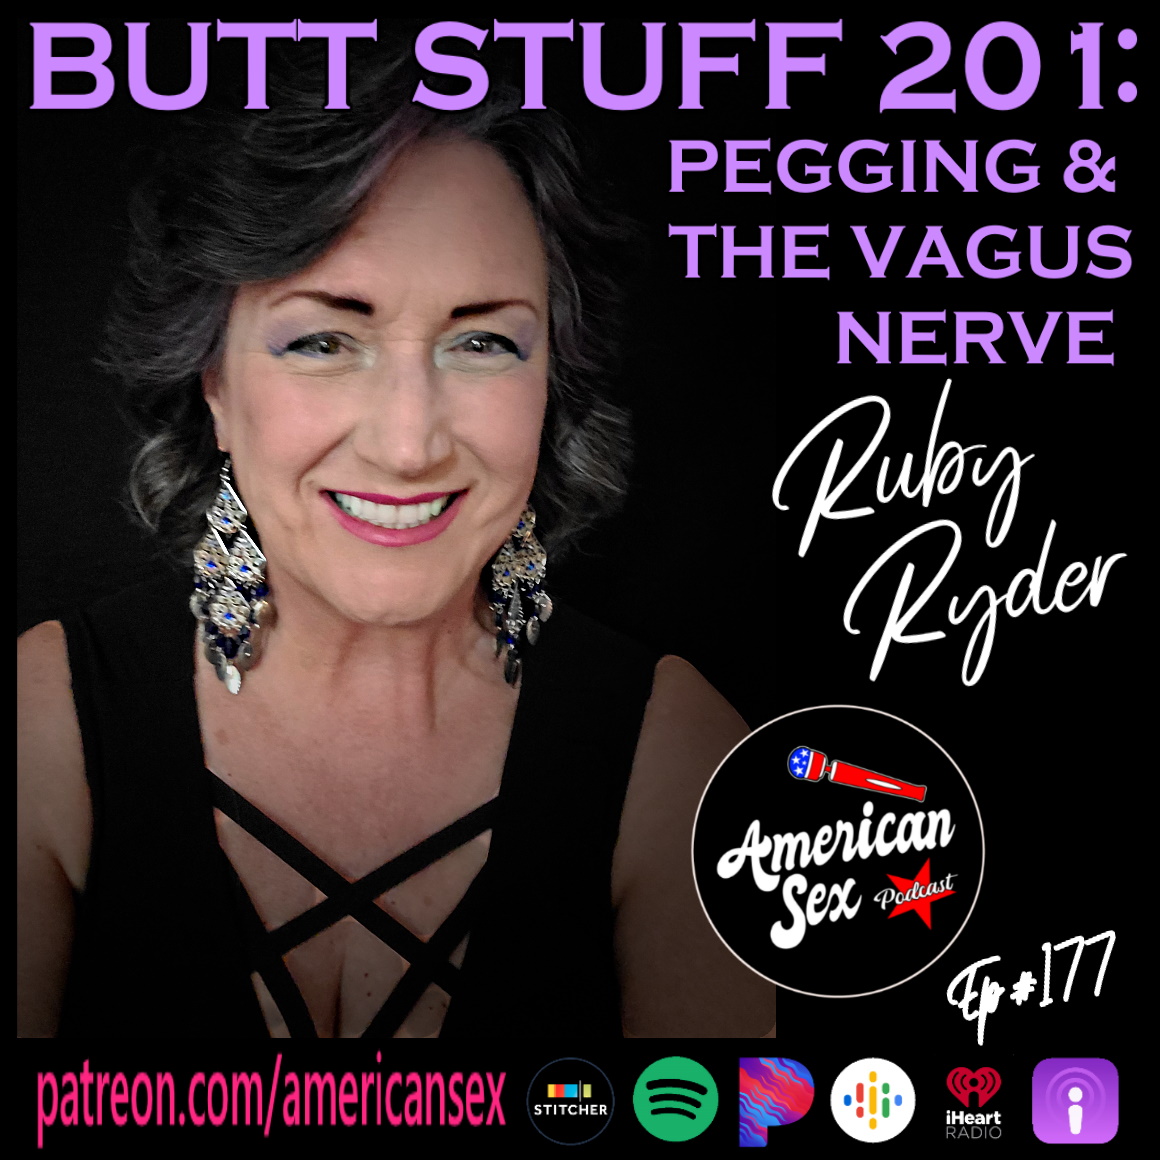 Ruby Ryder Pegging and Vagus Nerve Podcast episode art - American Sex episode 177